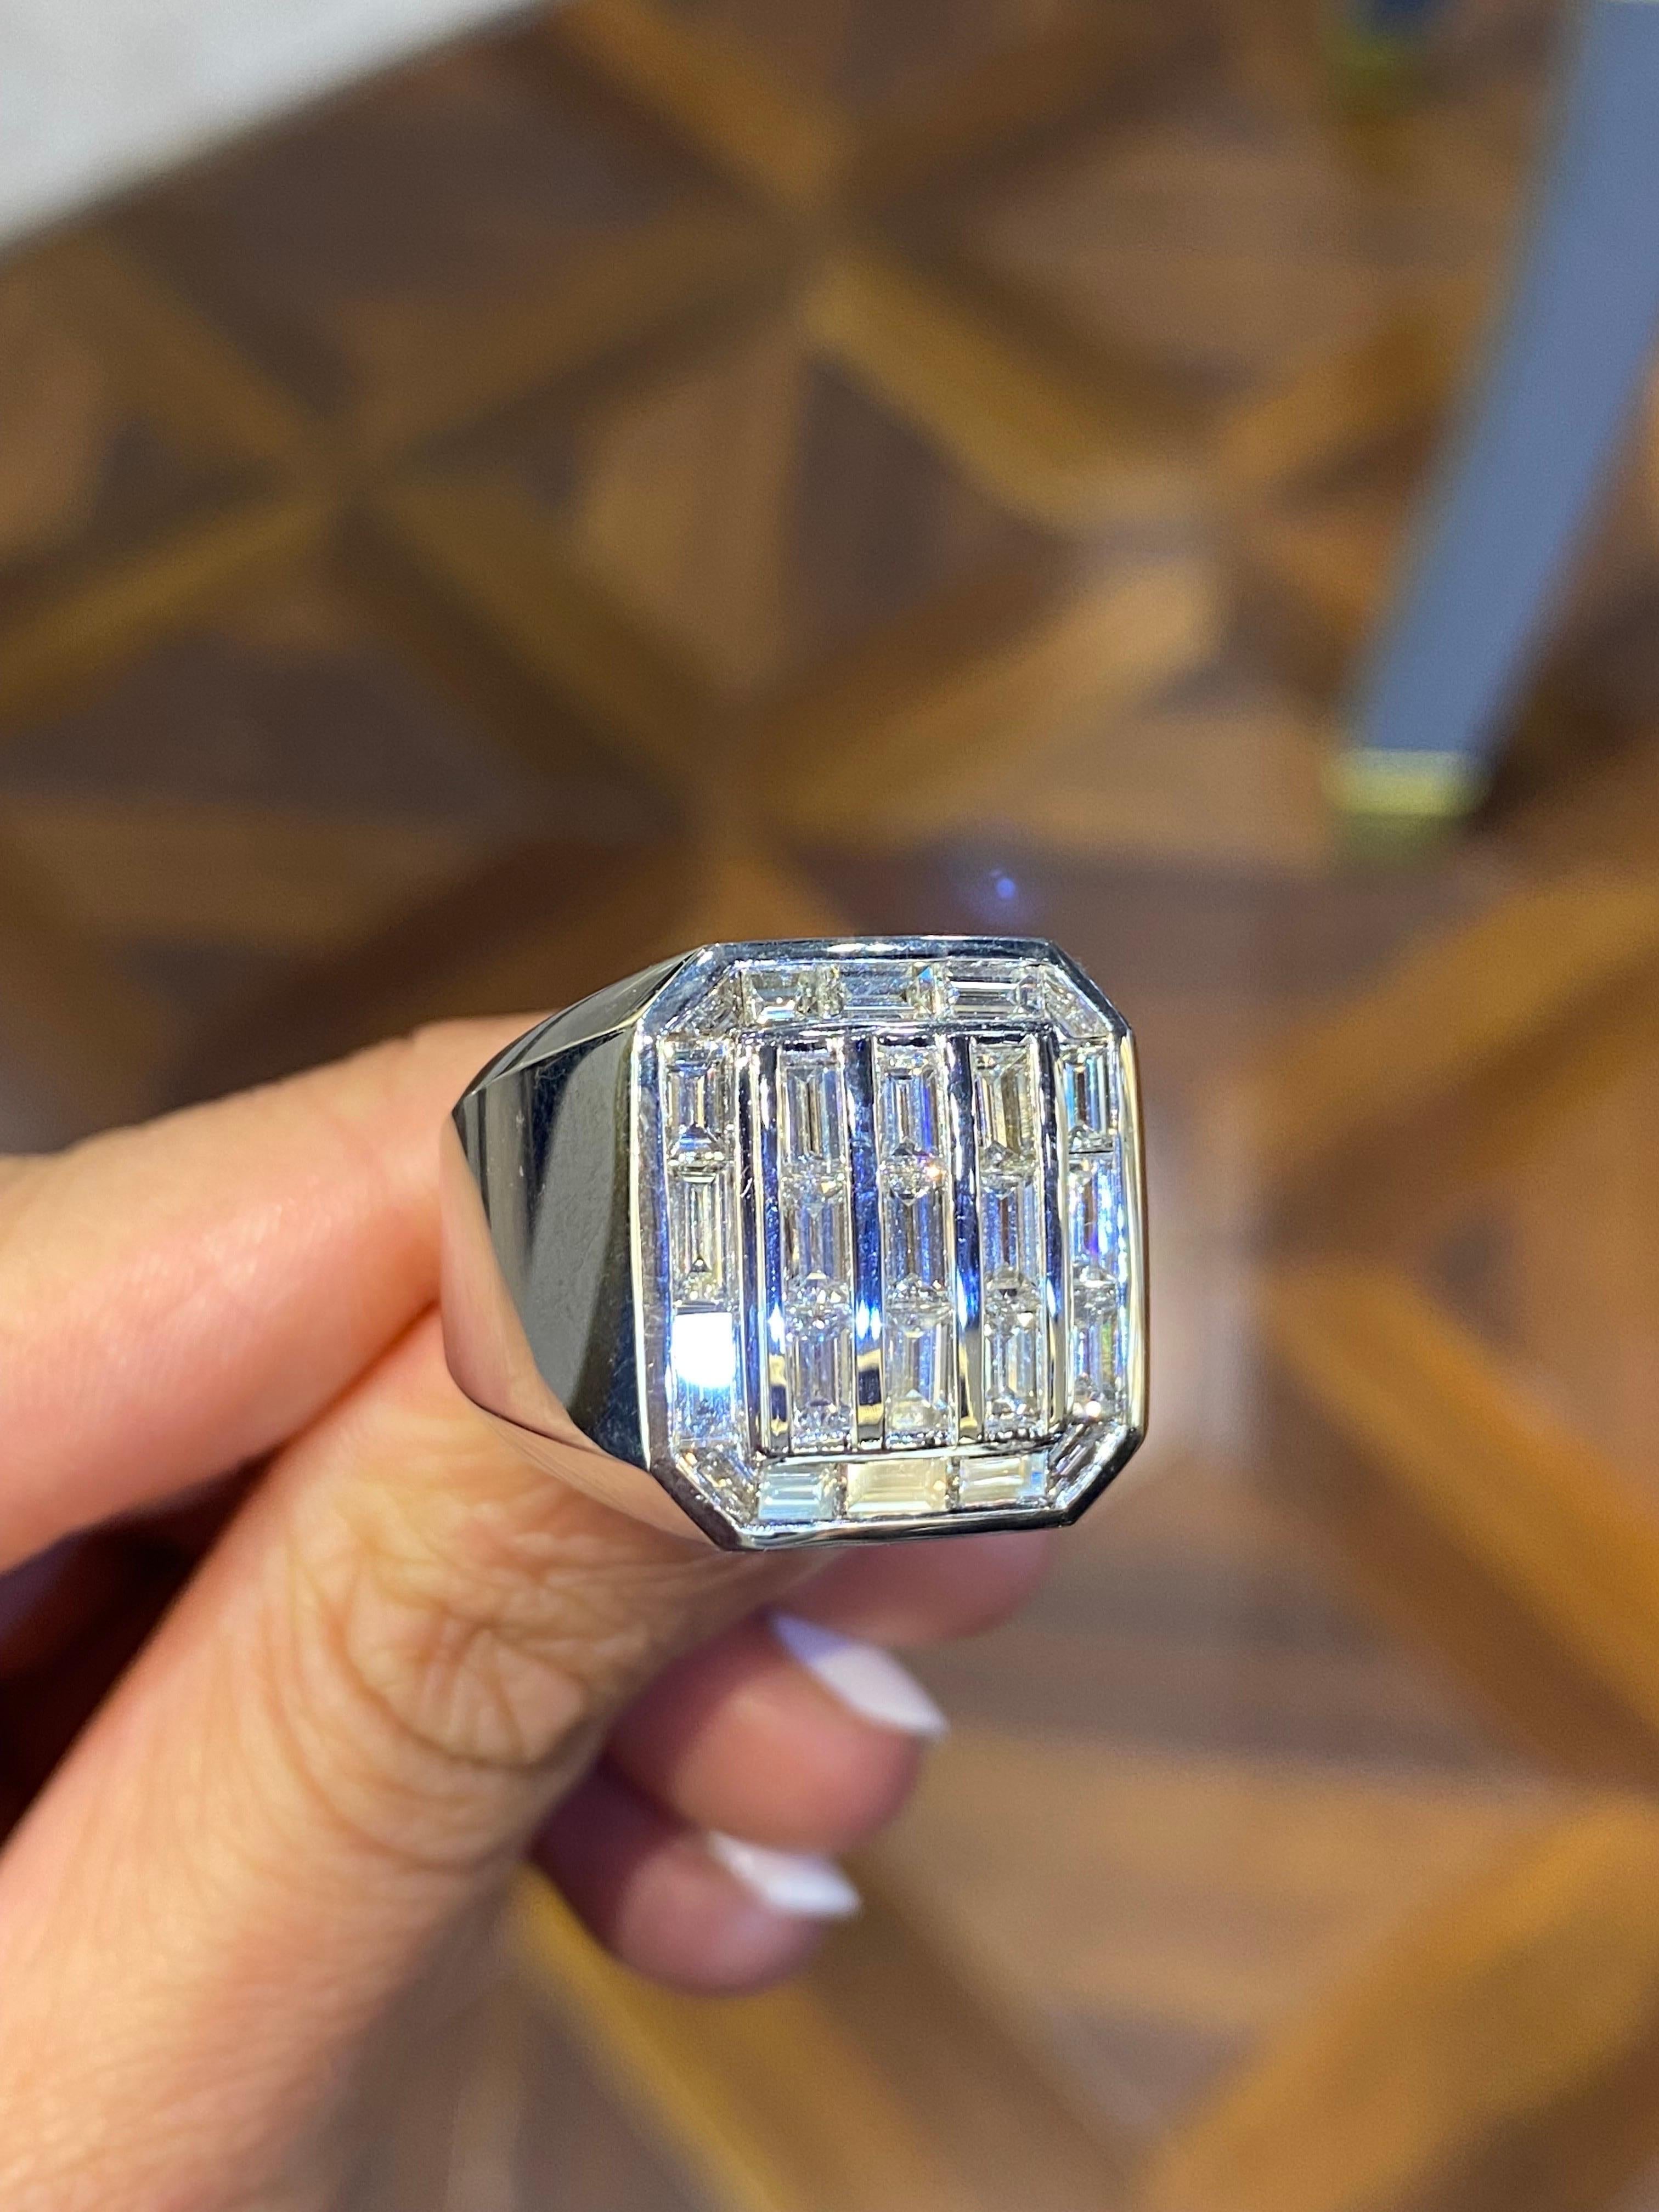 Set of 5 Rings:

Emerald Mens Ring: 19,900
8.12 ct Zambian emerald 
5 carat VS quality Diamond

Women's Diamond Ring: 6,000
4 carat VS quality Diamind
 
Solitaire Men's Diamond Ring: 16,900
1.18 carat solitaire center piece, 1.13 carat